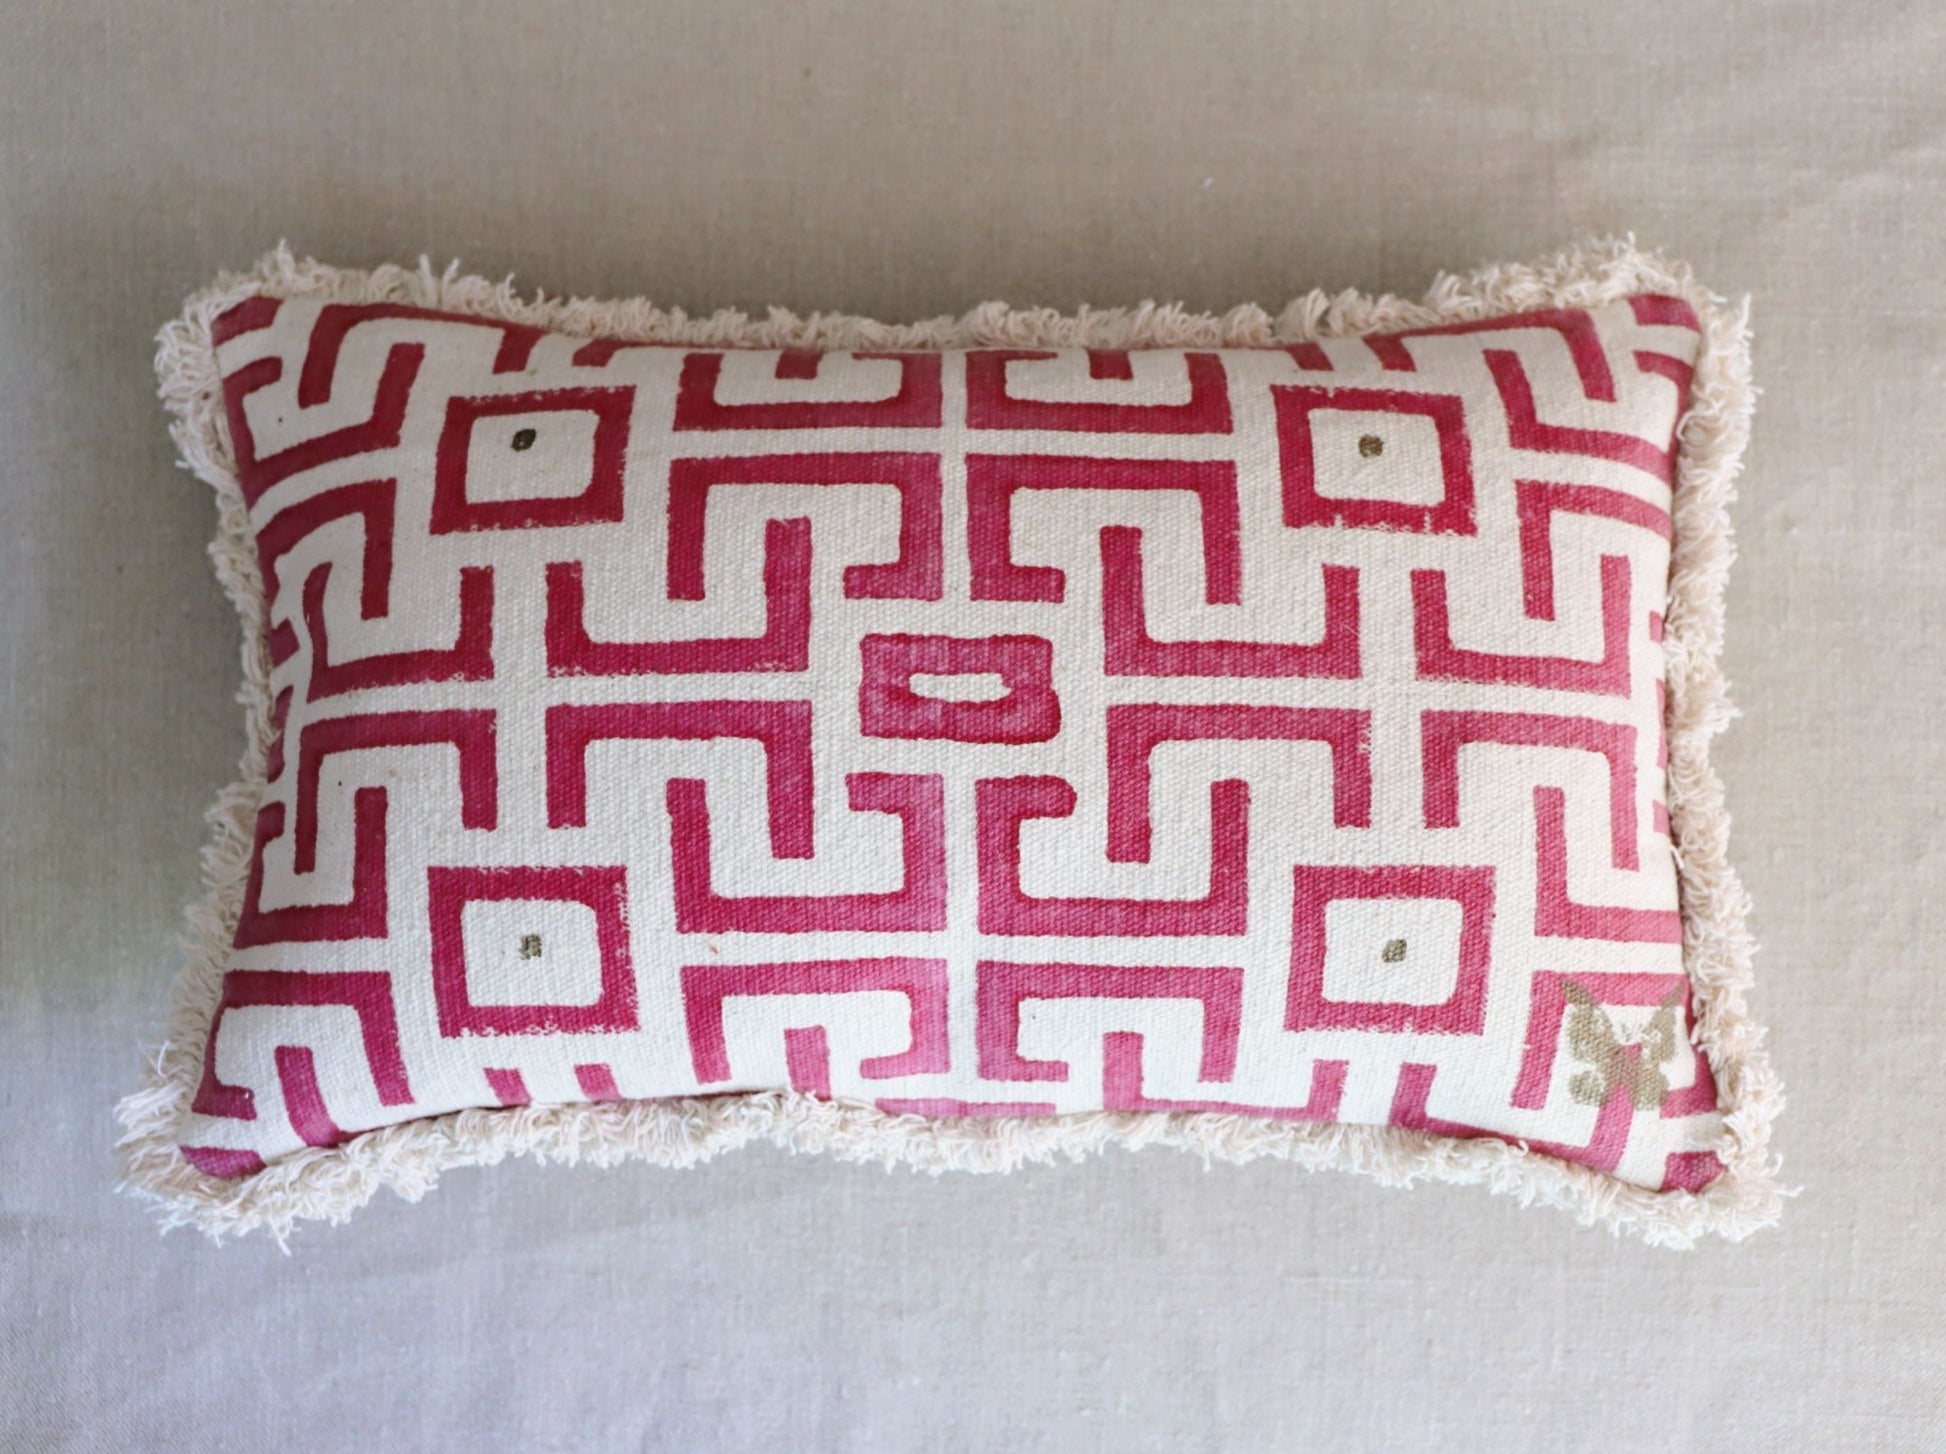 Cushions Cushion - Block Printed Cotton - Cotton Frill Crimson 20324